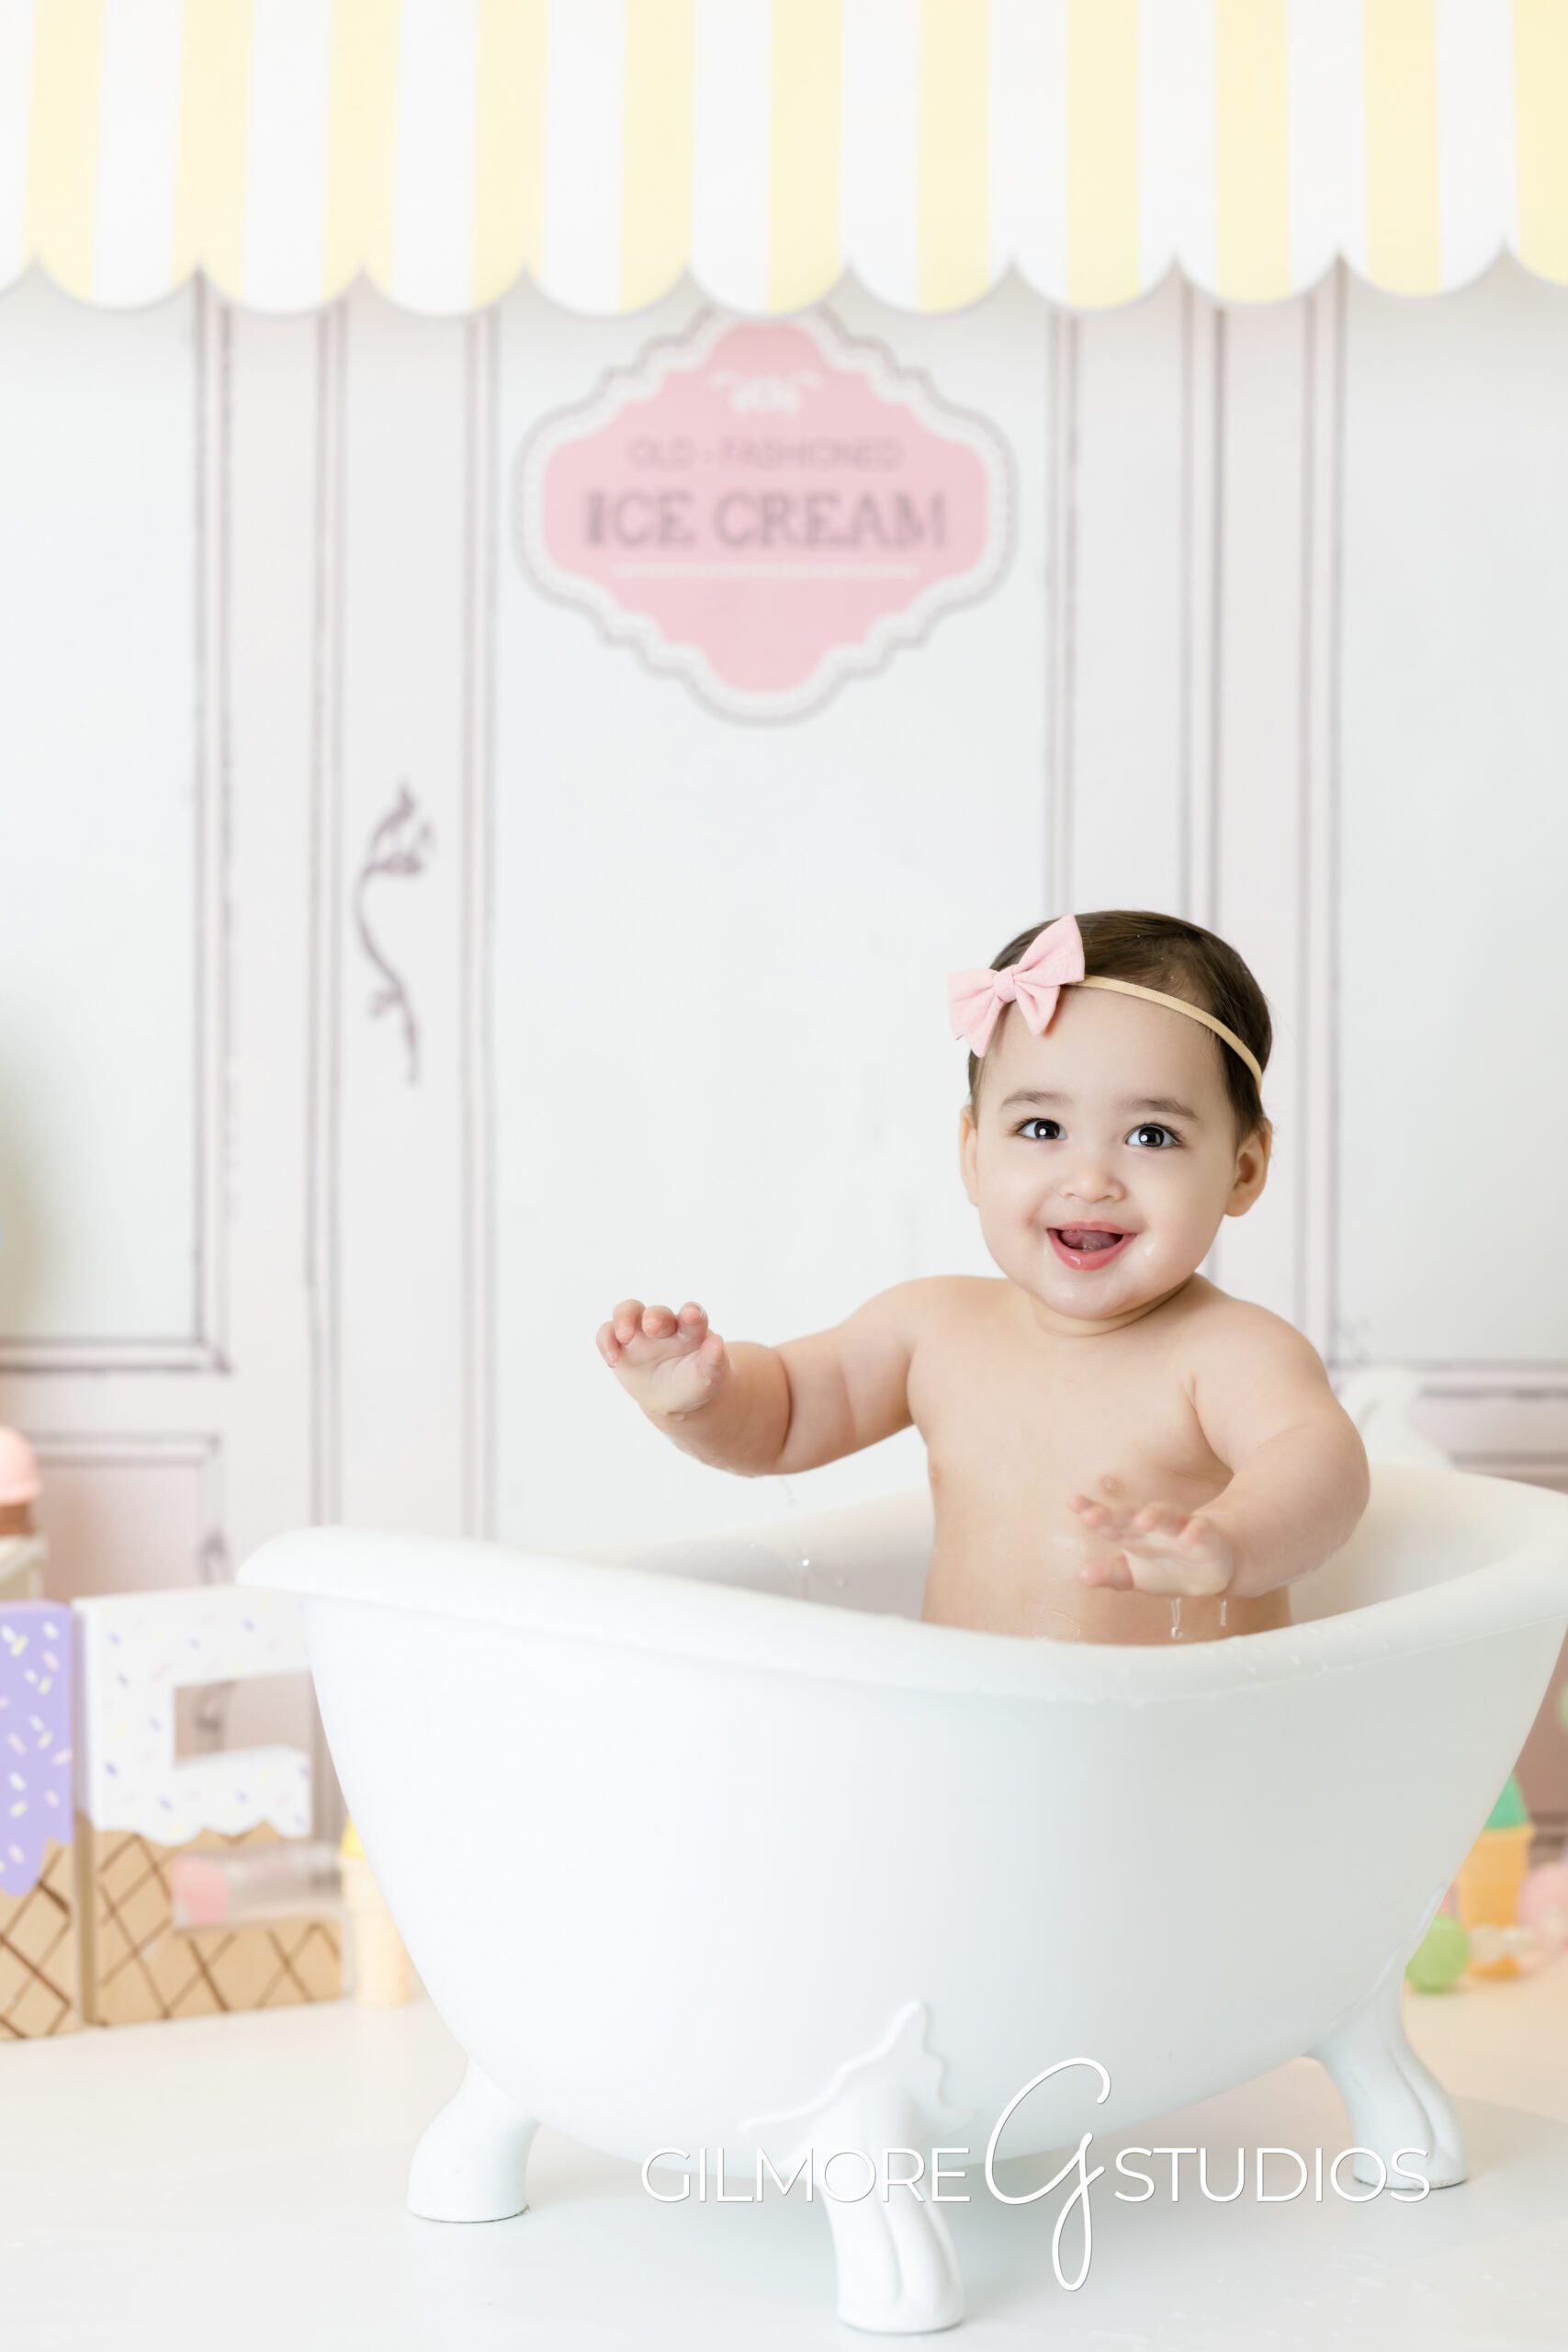 ice cream theme cake Smash, little girl, bathtub, pink bow, smiling, photography, Gilmore Studios